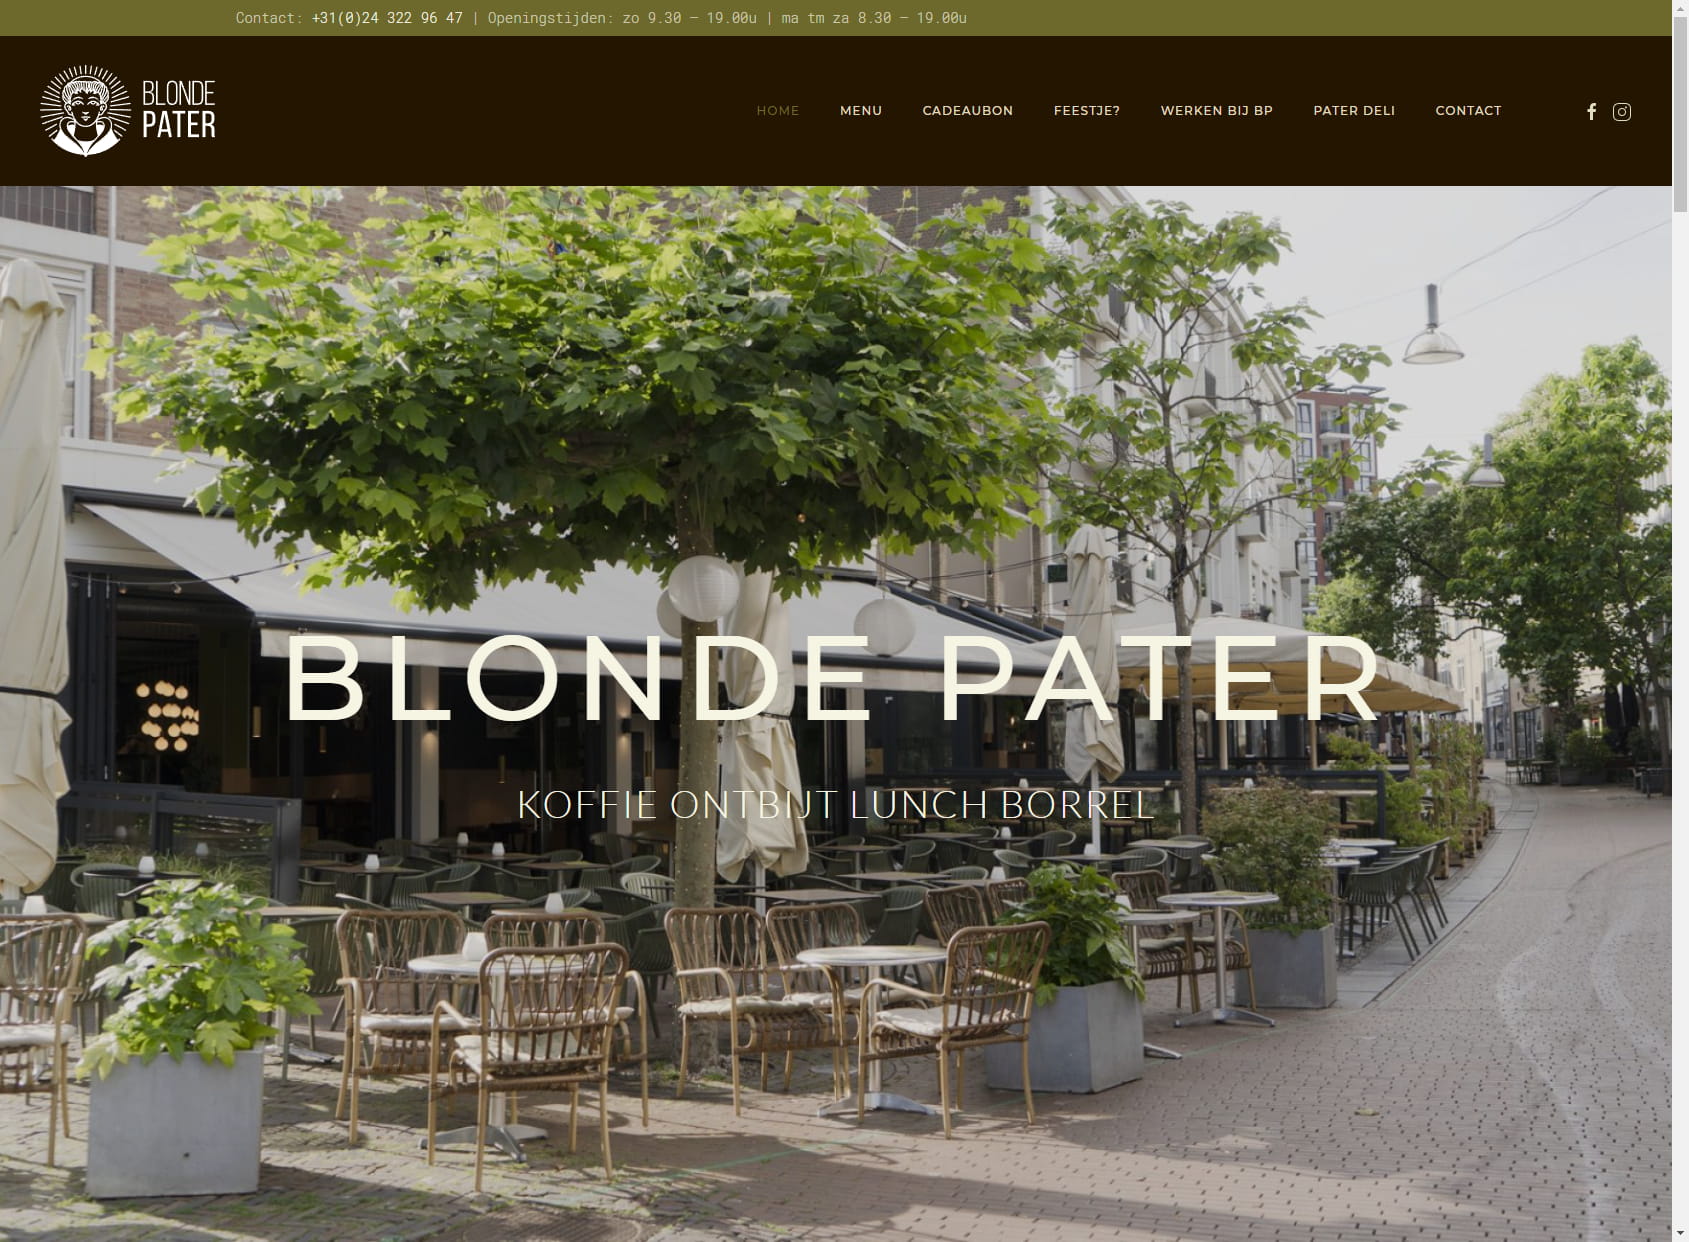 Cafe de Blonde Pater